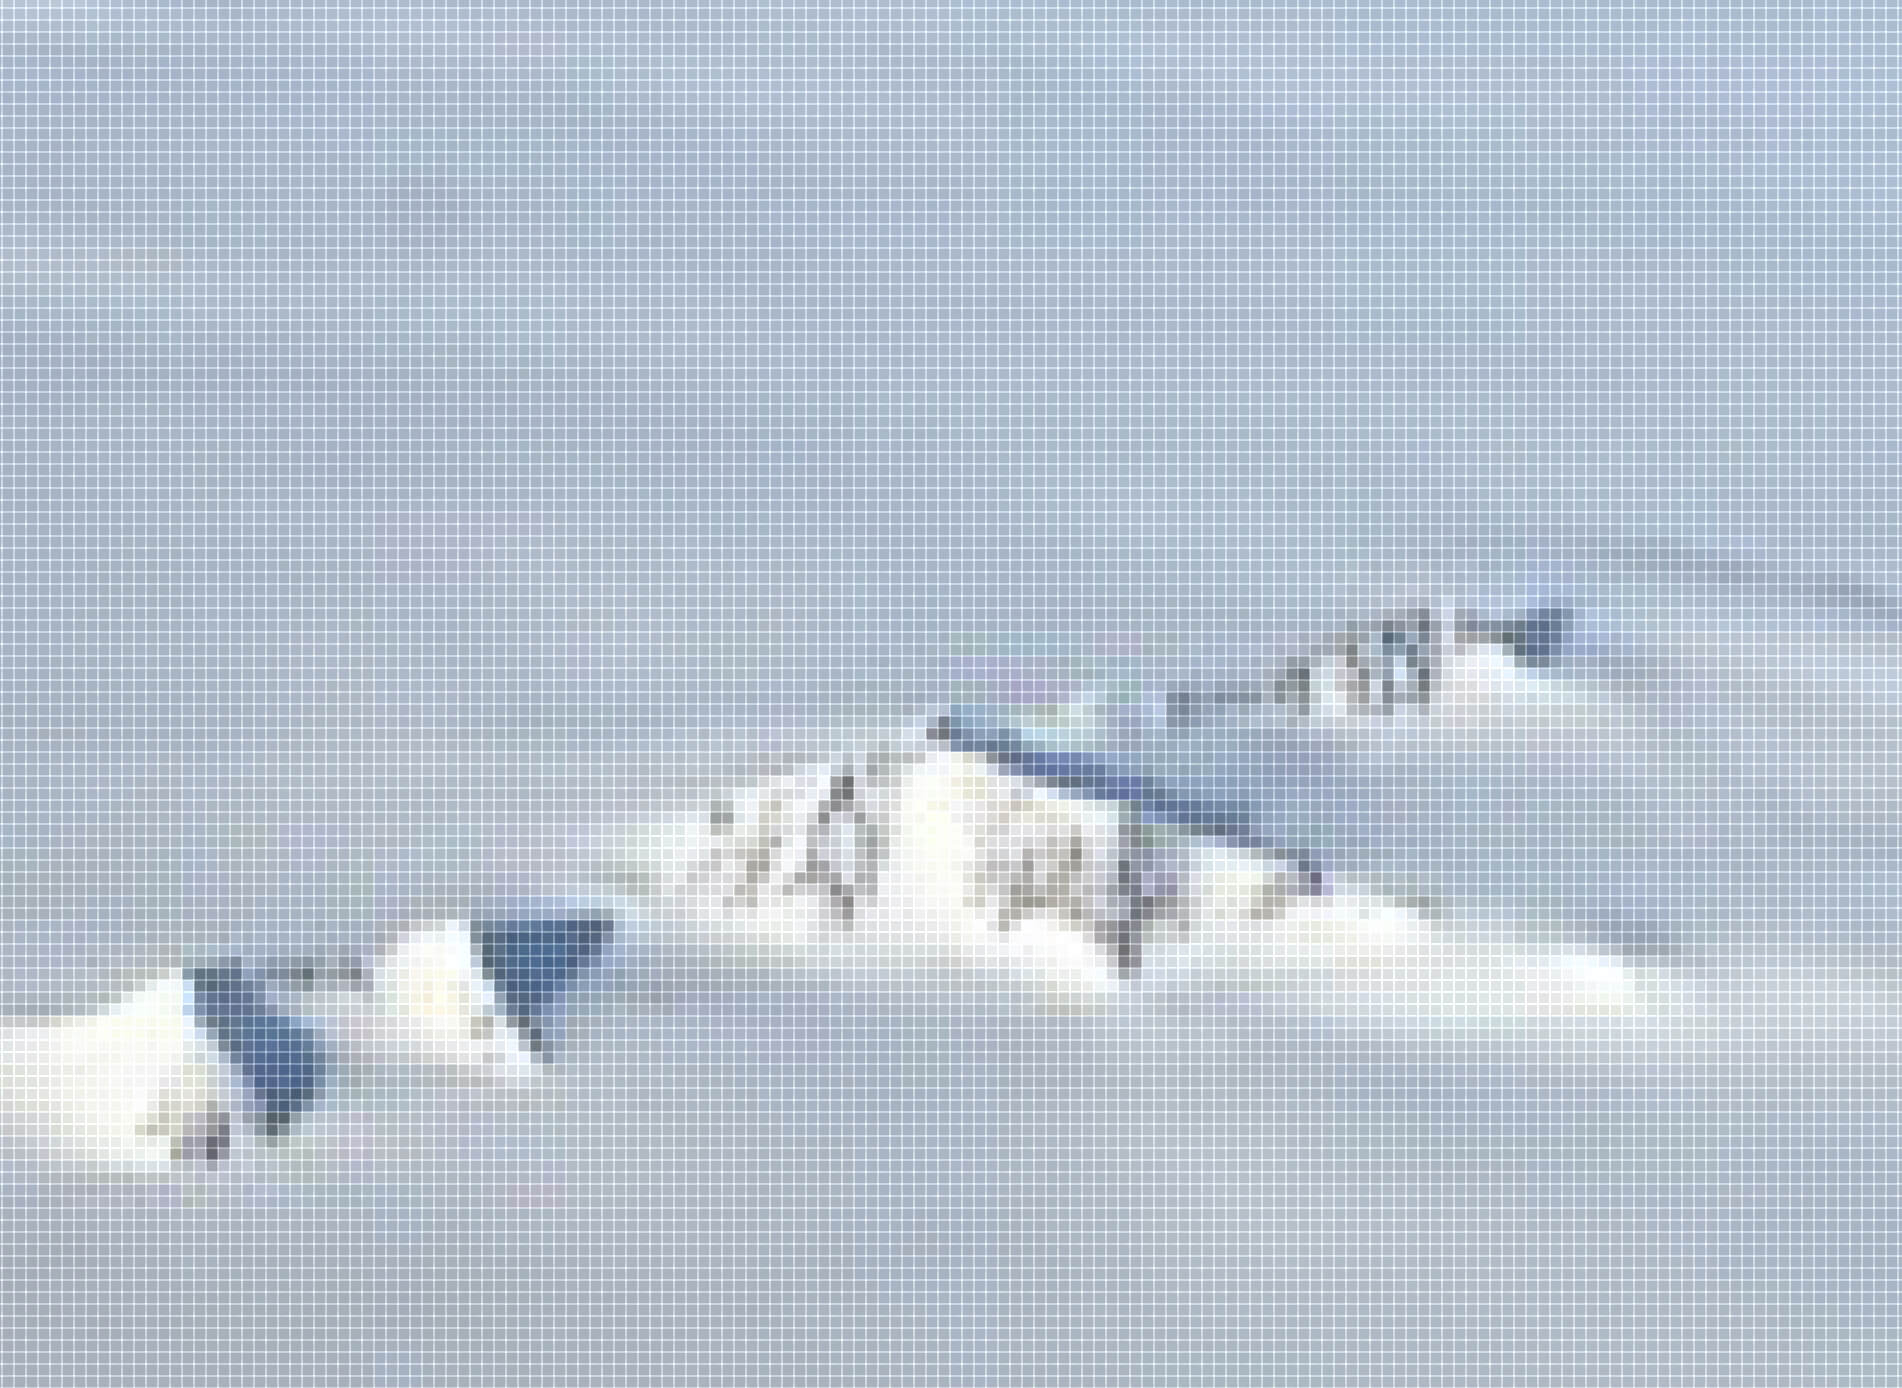 pixelated image of snow landform